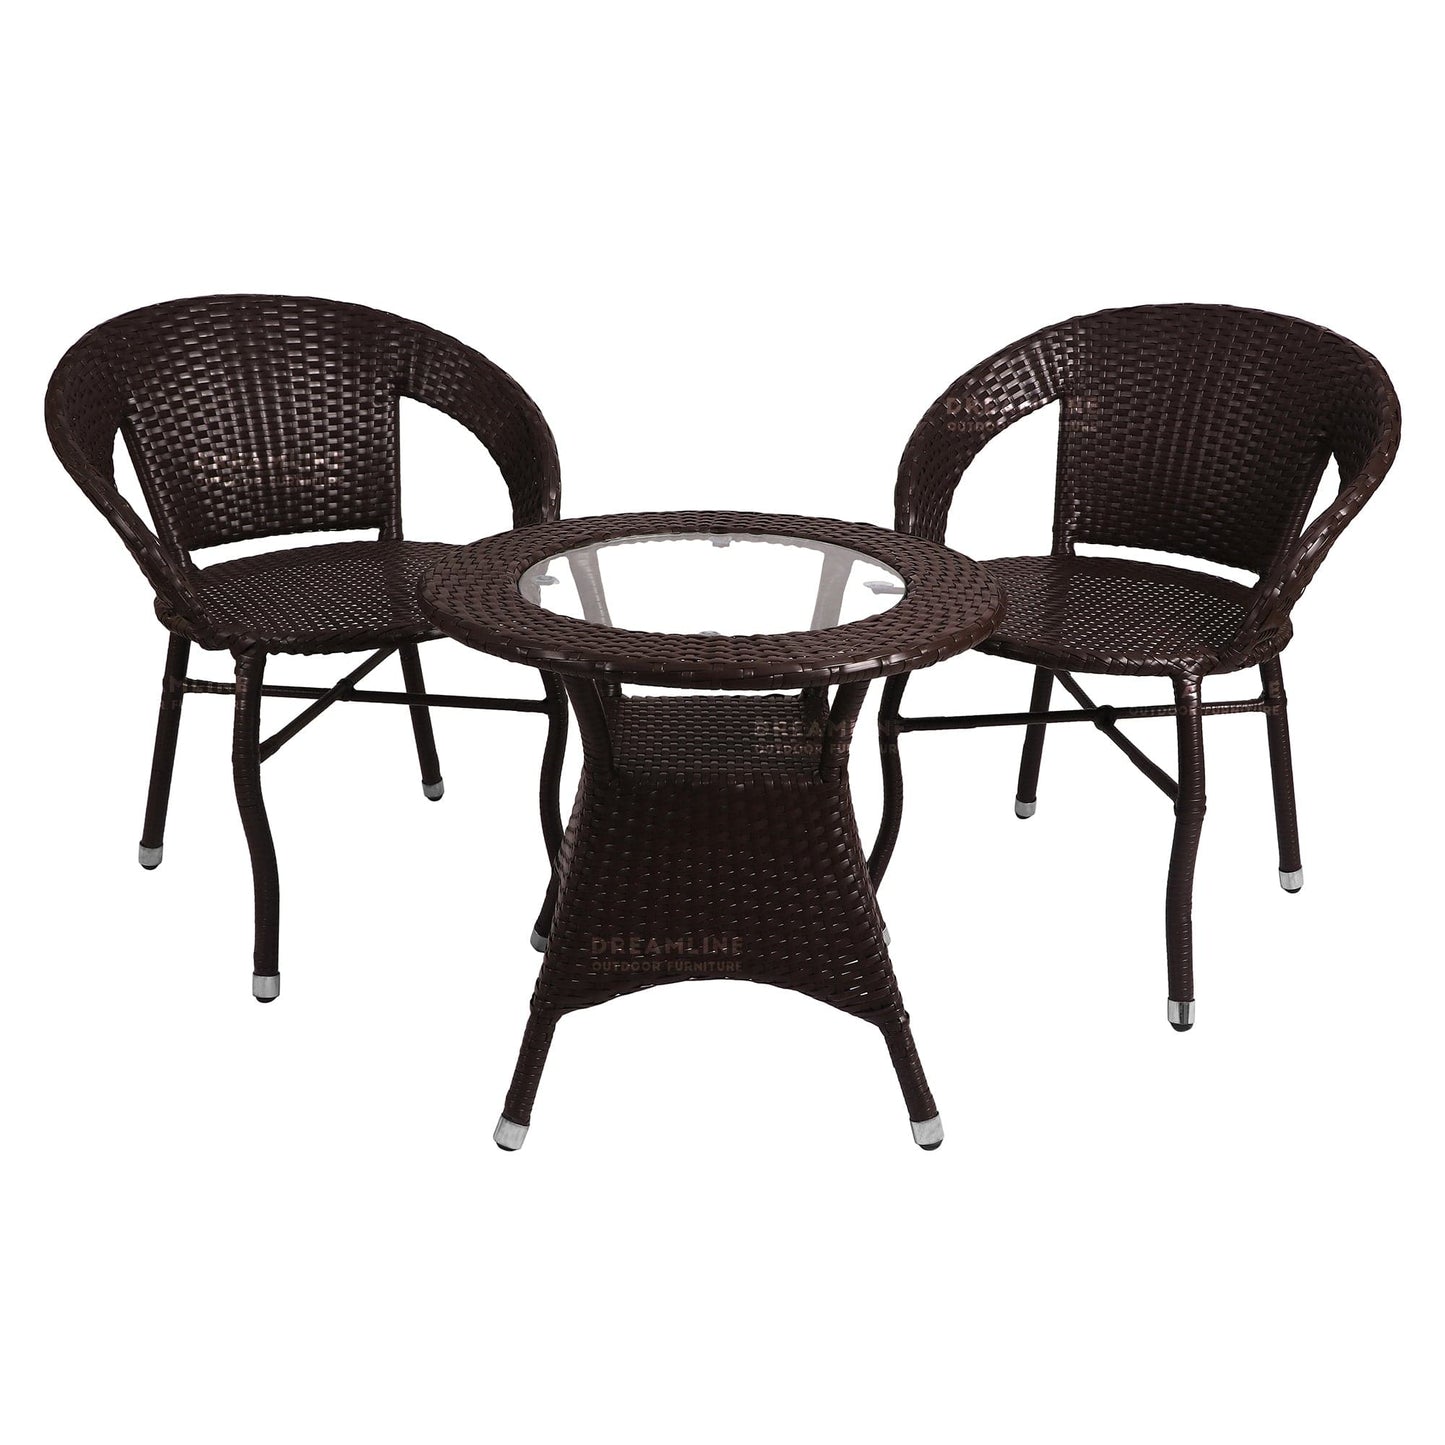 Dreamline Outdoor Furniture Garden Patio Coffee Table Set